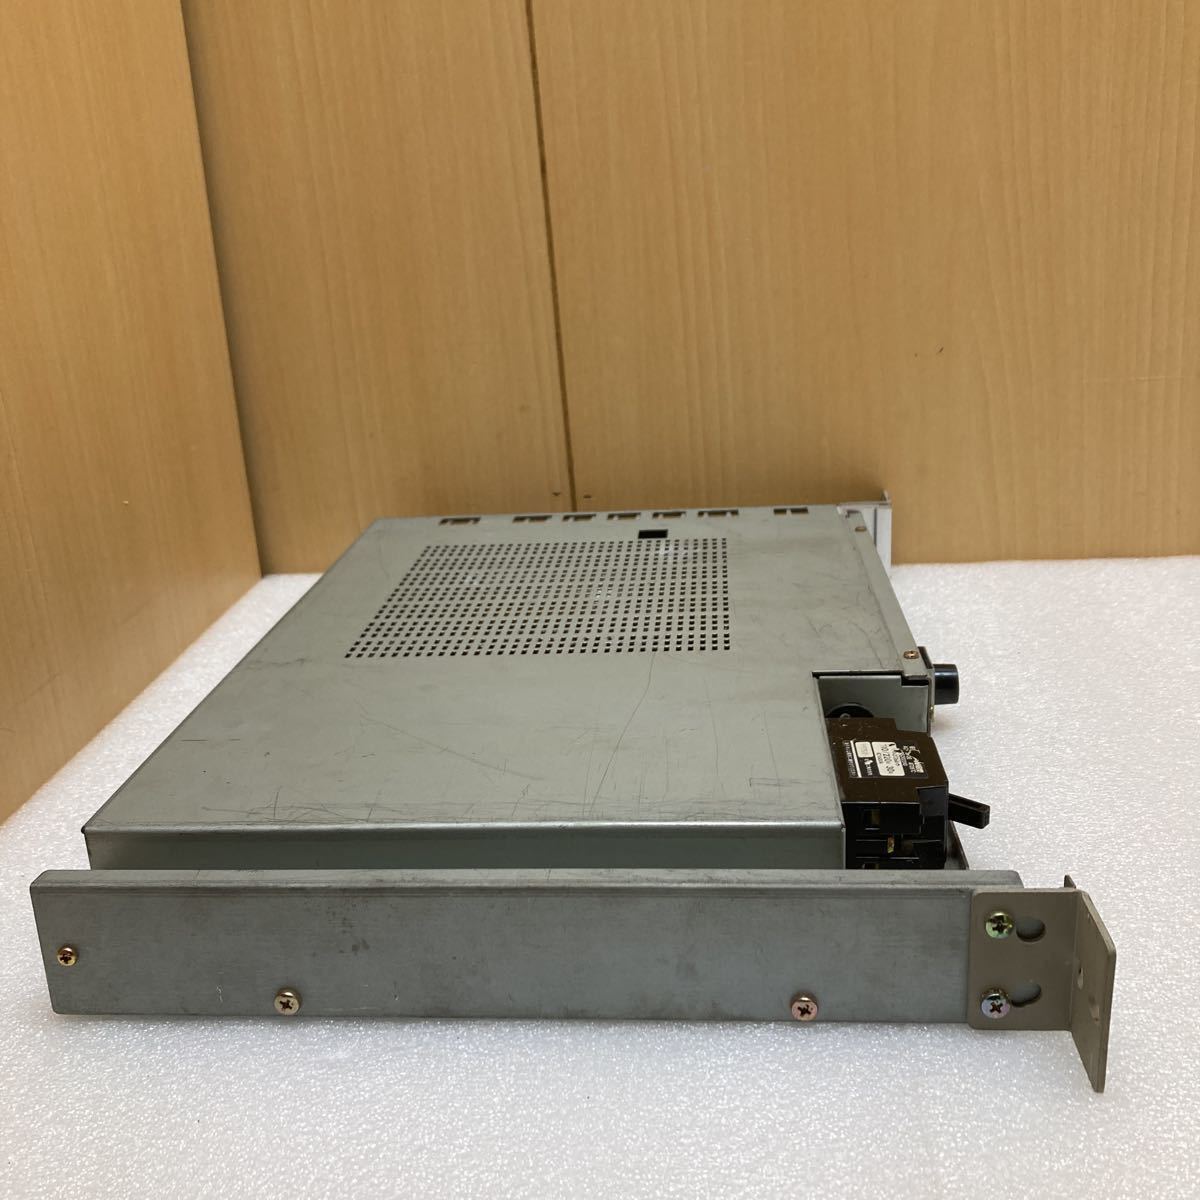 GXL9891 Panasonic Panasonic power supply control unit WU-L60A operation not yet verification present condition goods 1109